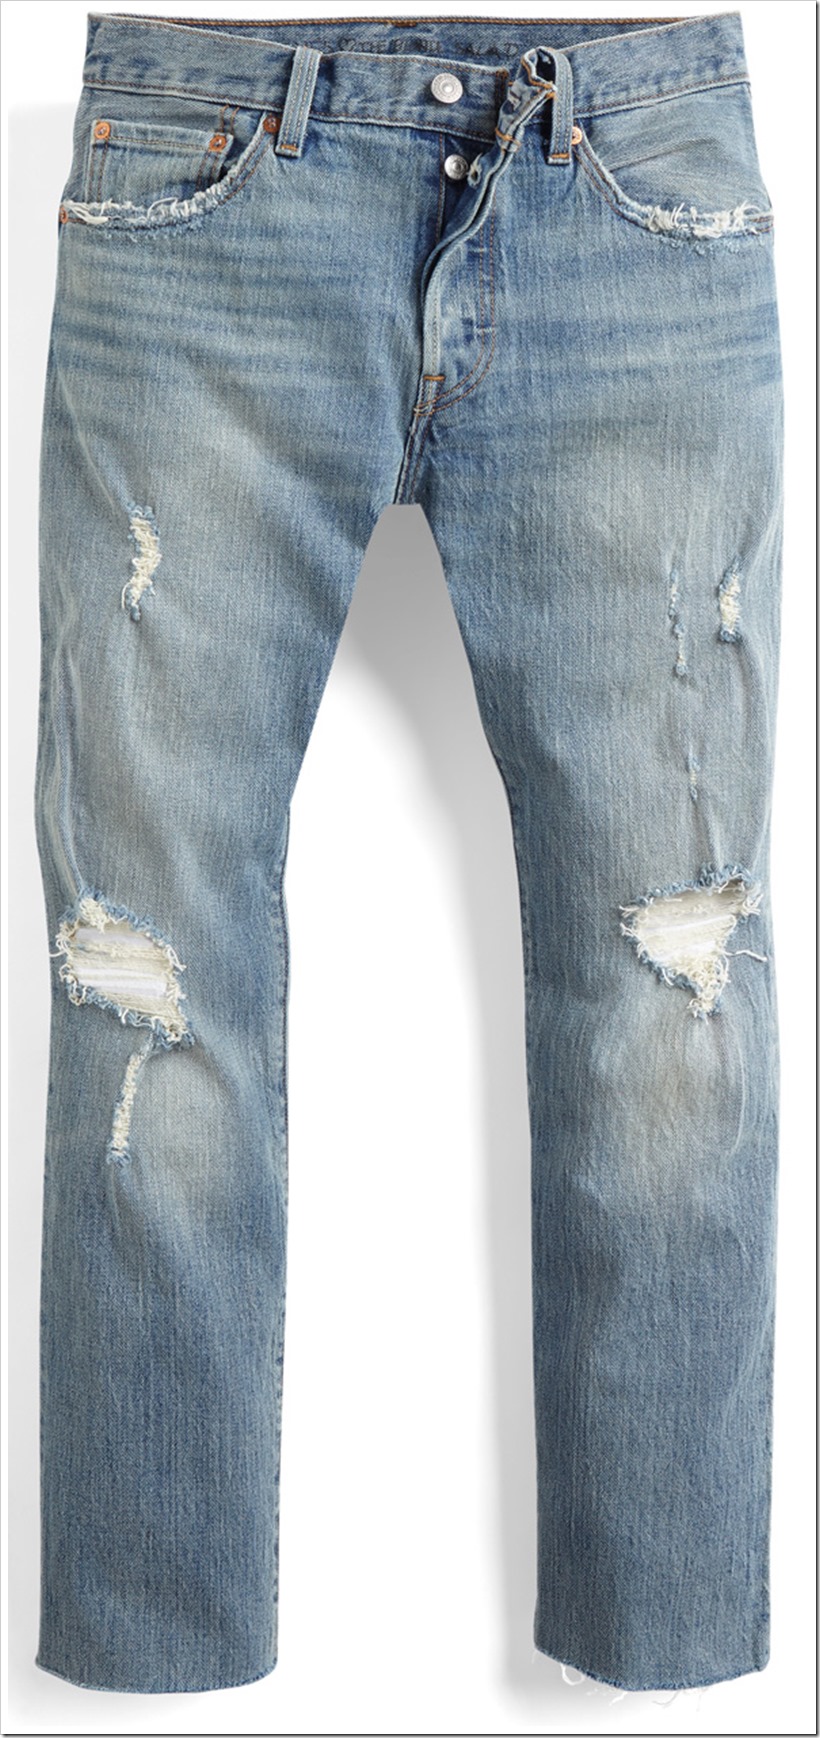 Chiara Ferragni Jeans By Levi’s | Denimsandjeans